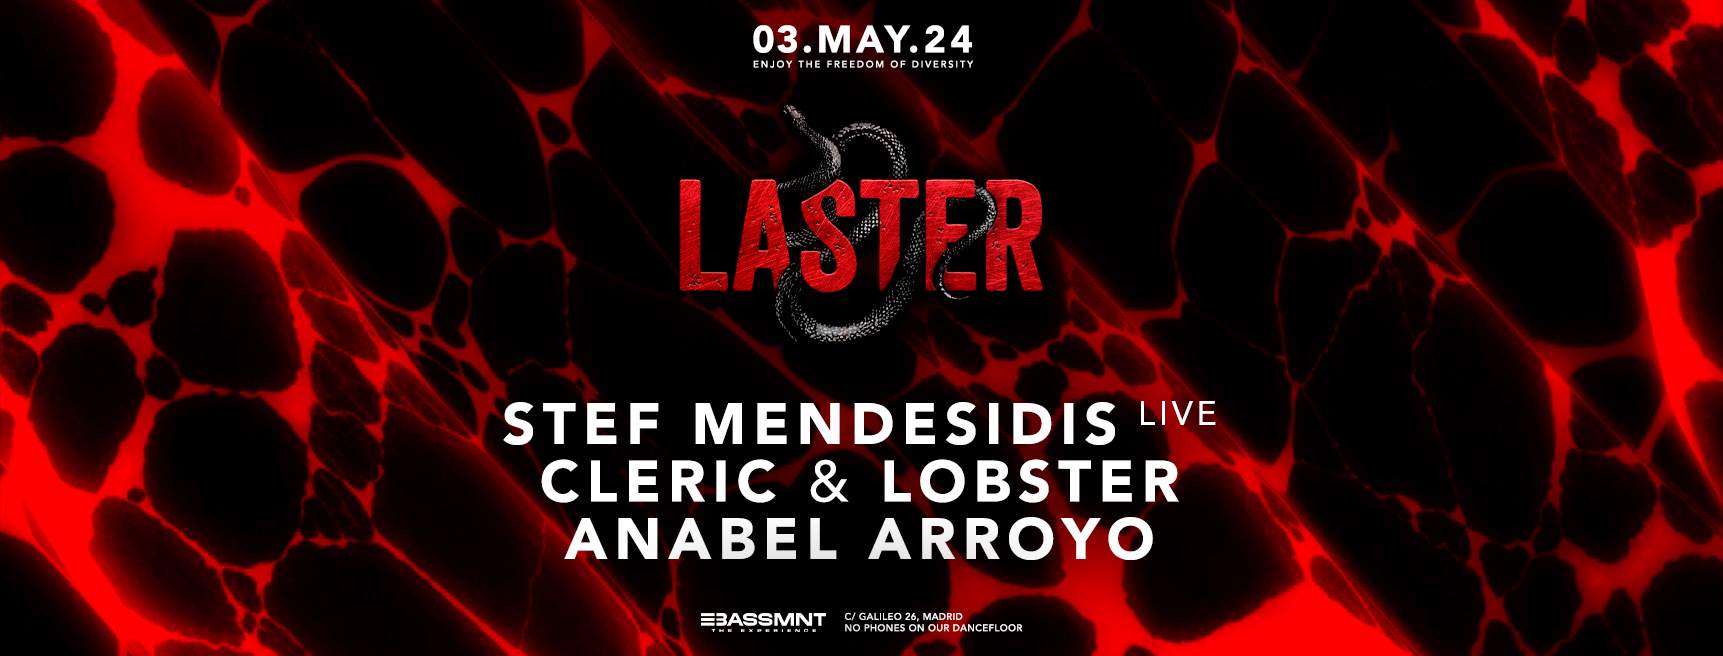 Laster Club vol. LI - Stef Mendesidis LIVE, Cleric & Lobster, Anabel Arroyo - Página frontal